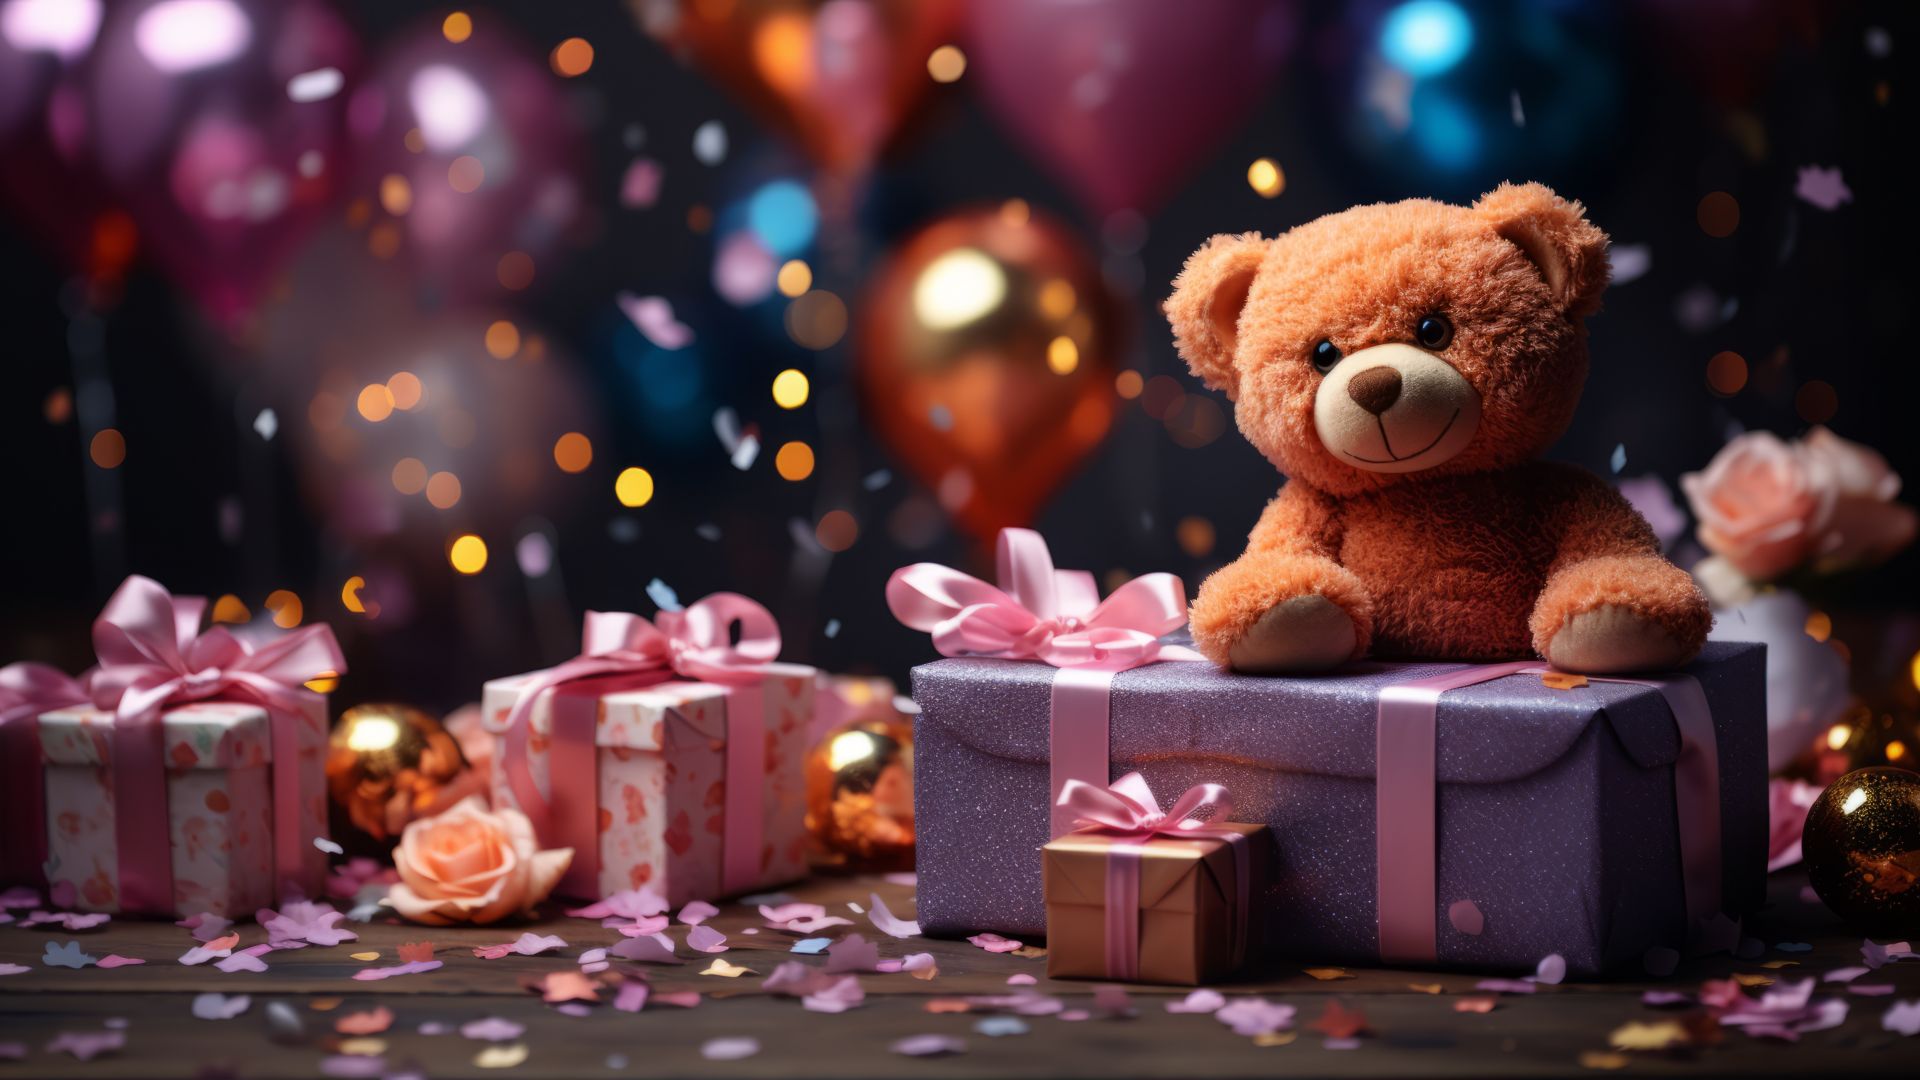 День рождения, Birthday background, balloons, cake, gifts (horizontal)